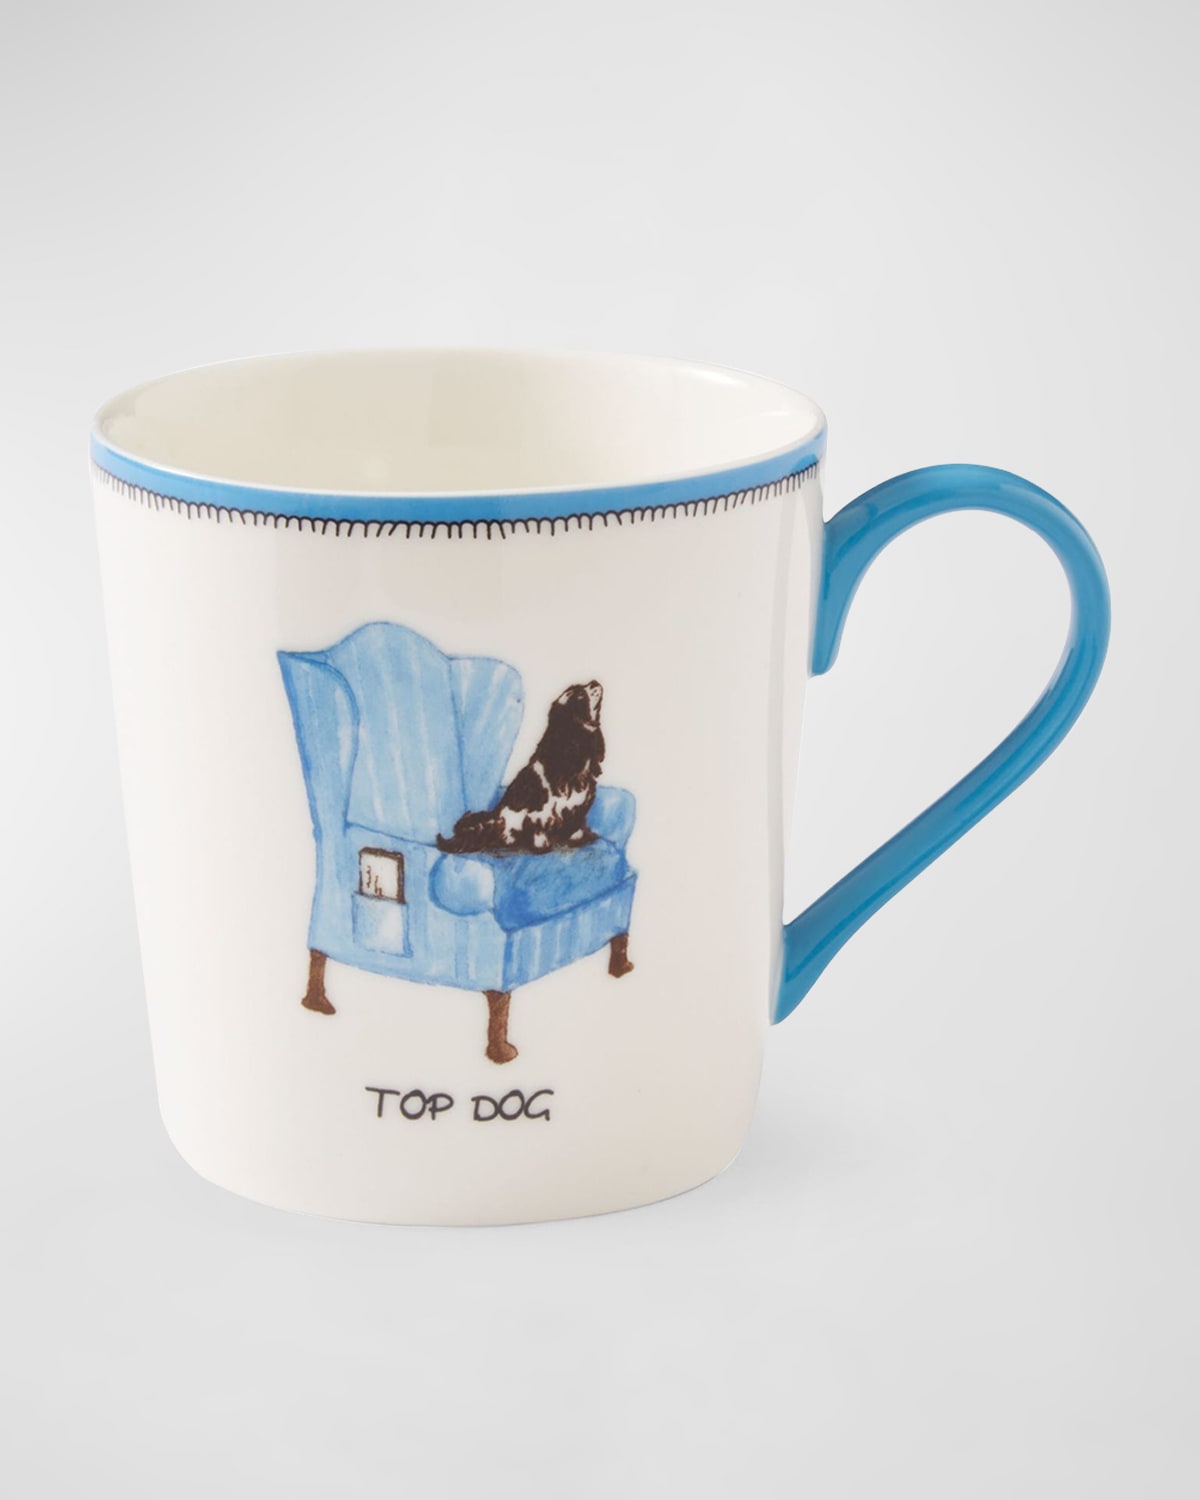 Kit Kemp For Spode Apple A Day Doodle Mug In Top Dog